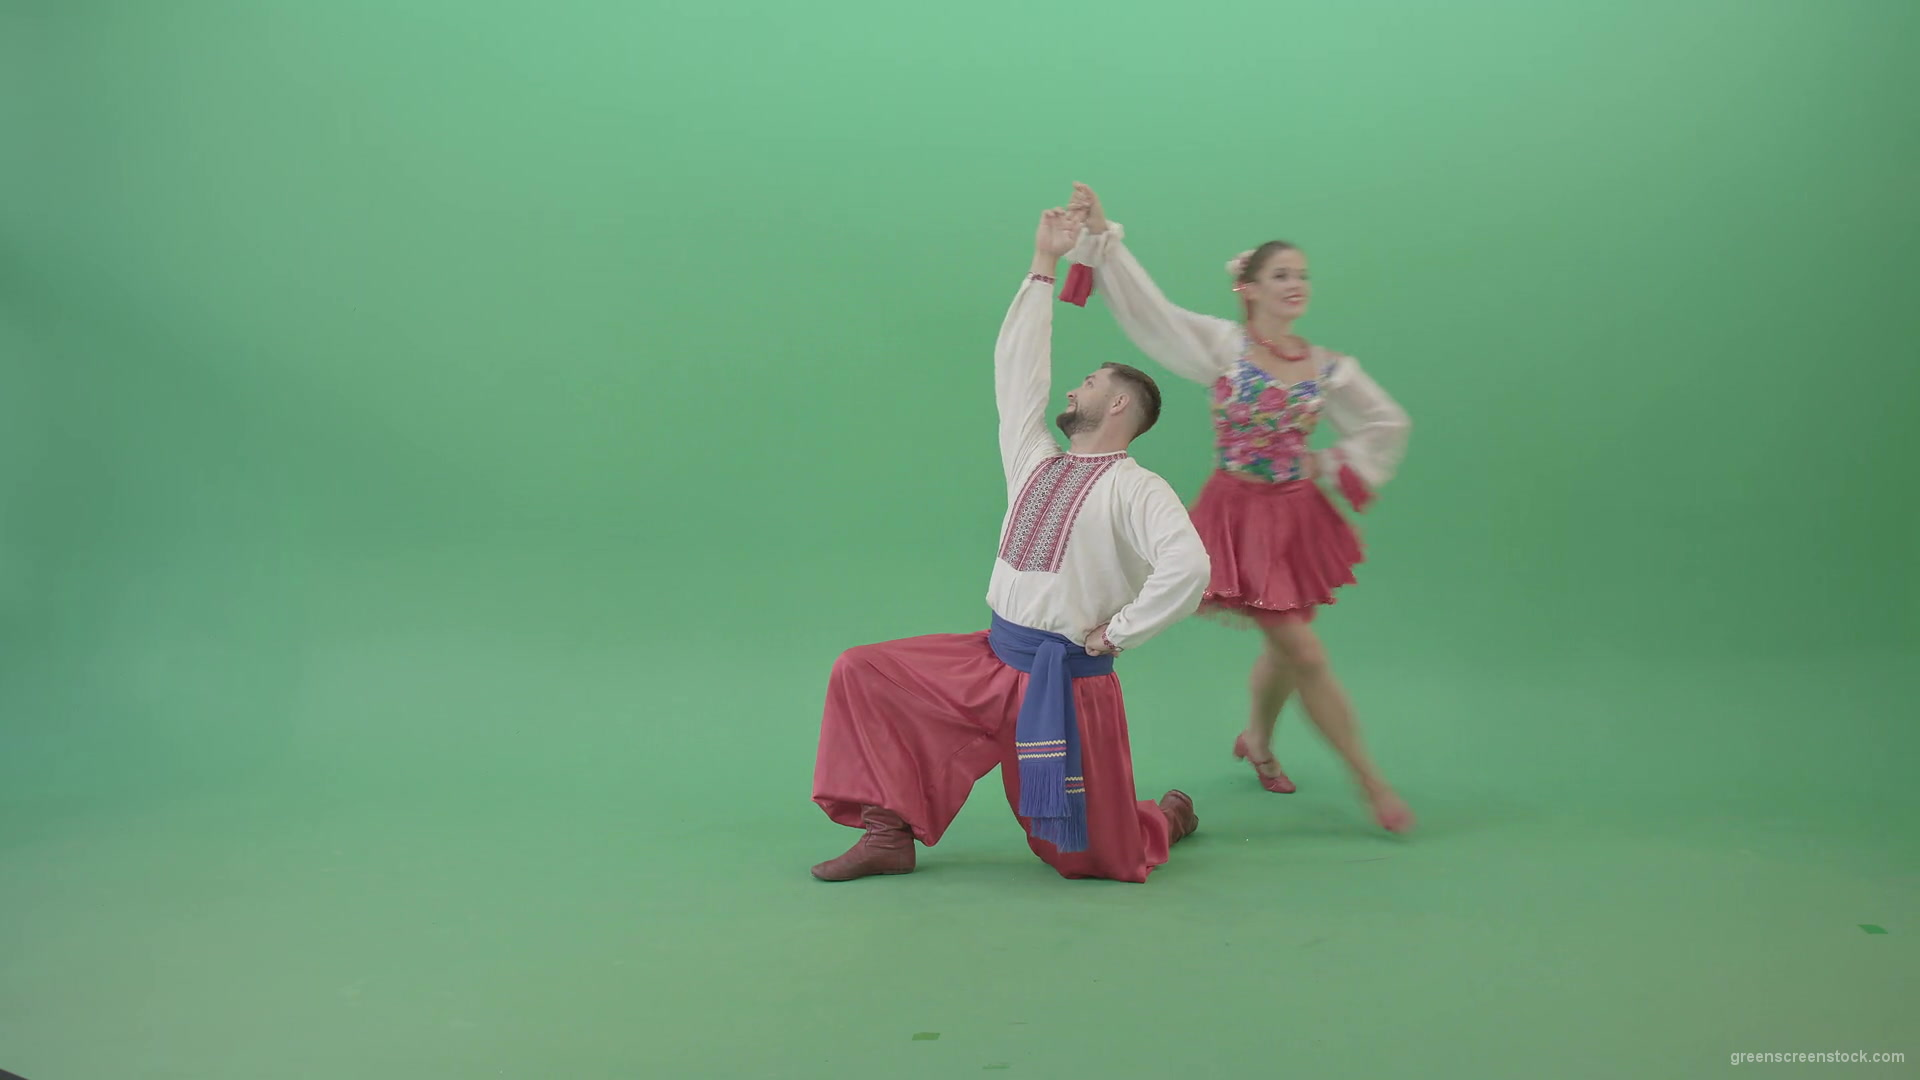 Kozak-Ukraine-dancing-girl-and-boy-isolated-on-Green-Screen-4K-Video-Footage-1920_005 Green Screen Stock